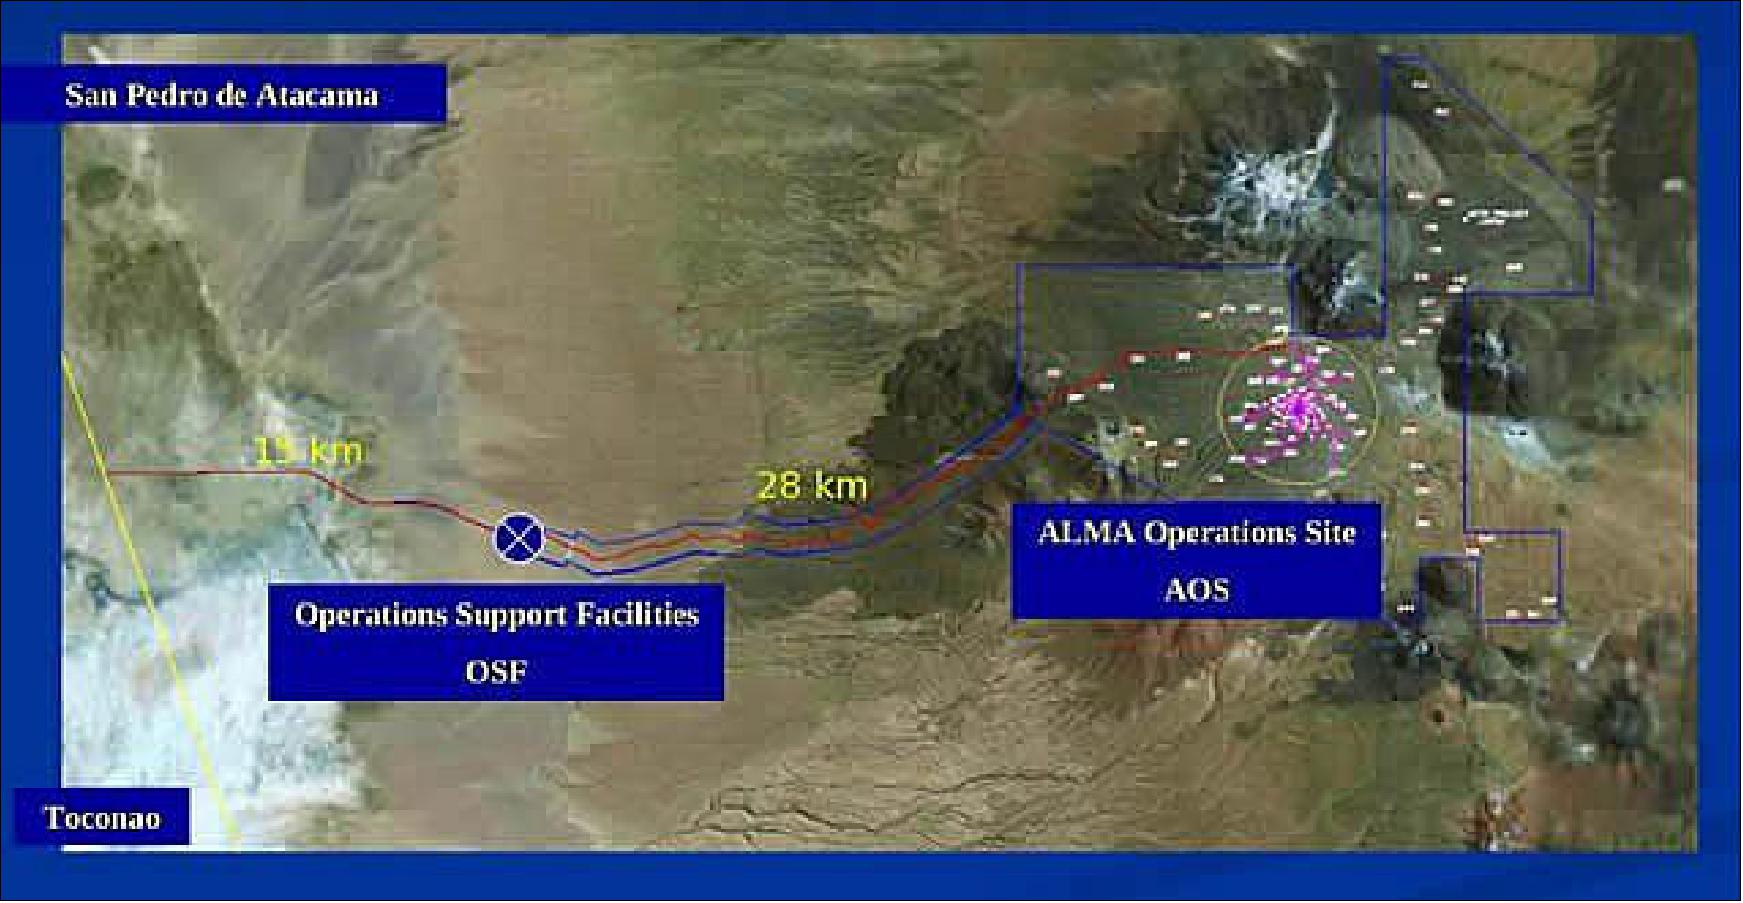 Figure 9: Access to the AOS and OSF facilities (image credit: ALMA partnership)